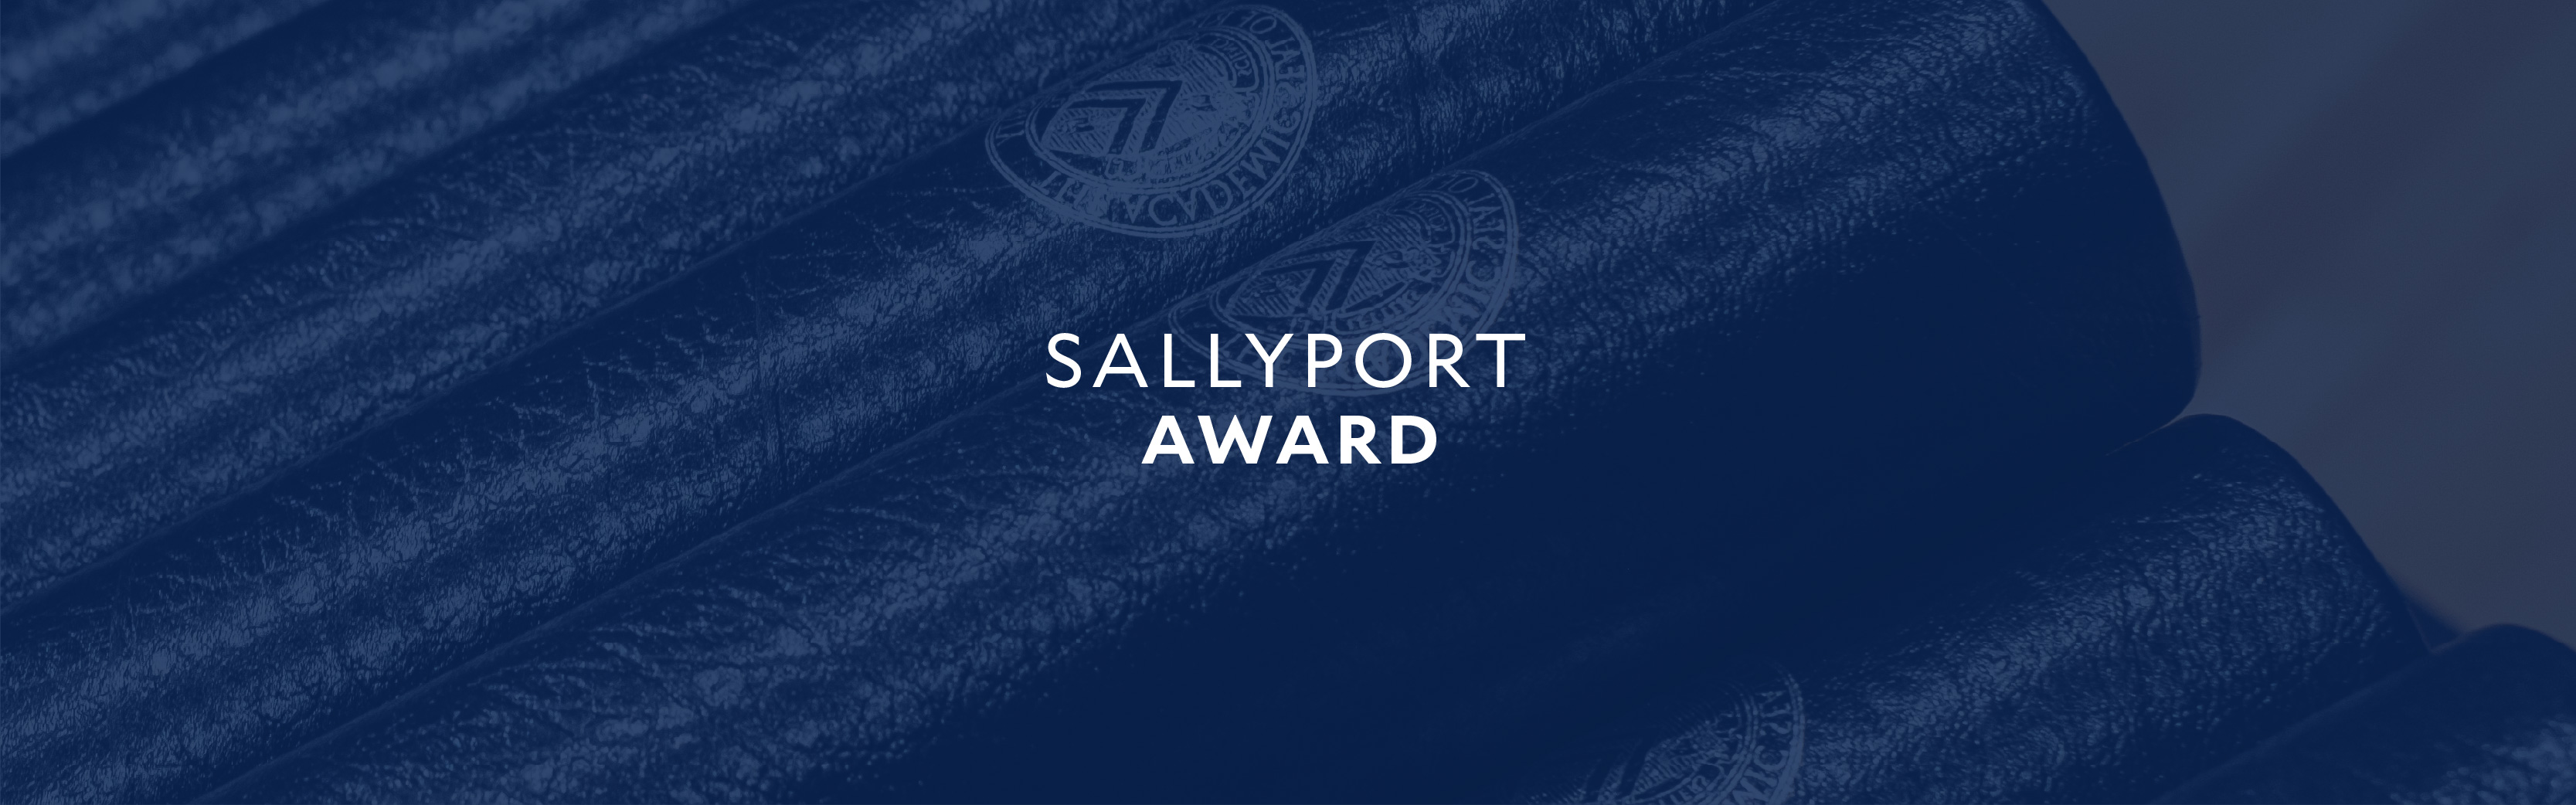 Sallyport Award